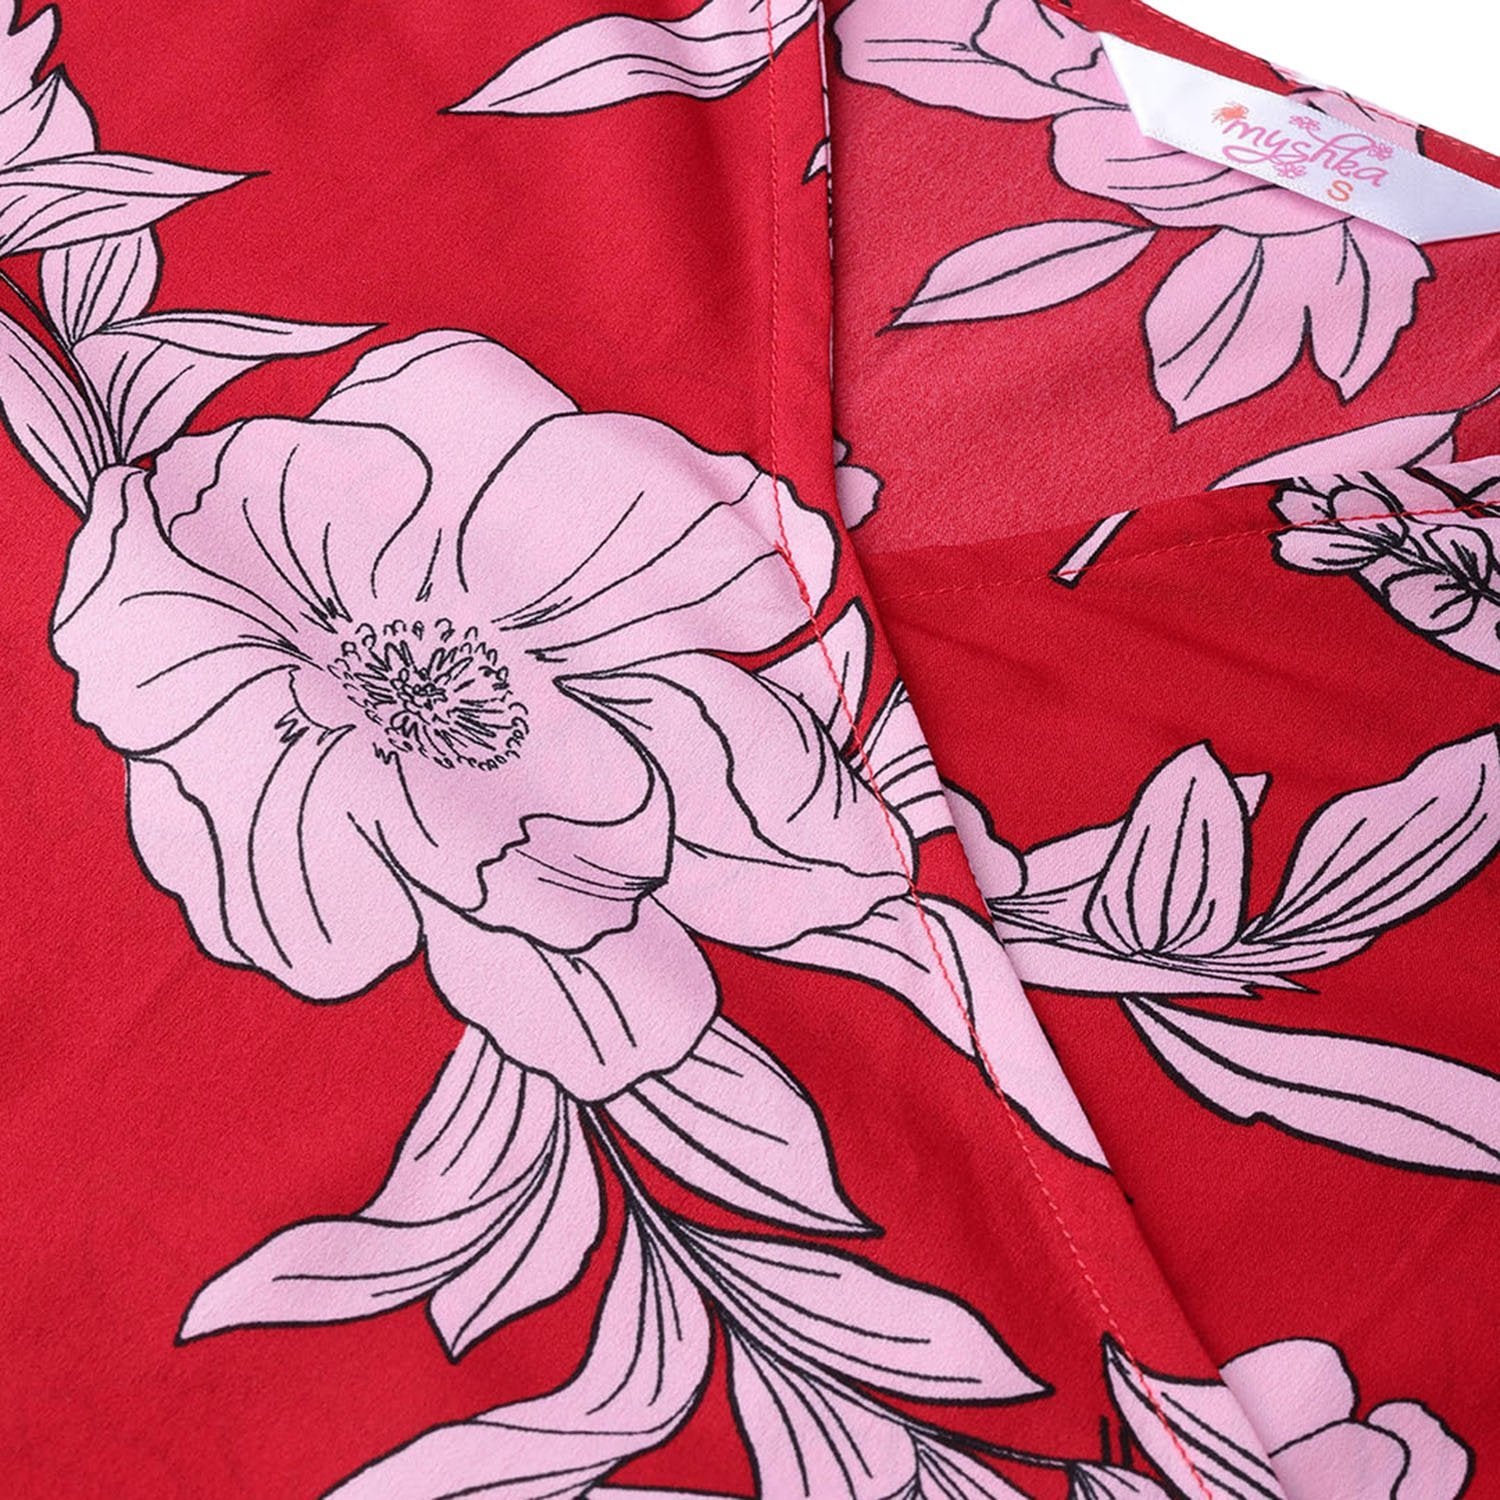 Women's Red Polyester Printed Half Sleeve V Neck Casual Dress - Myshka